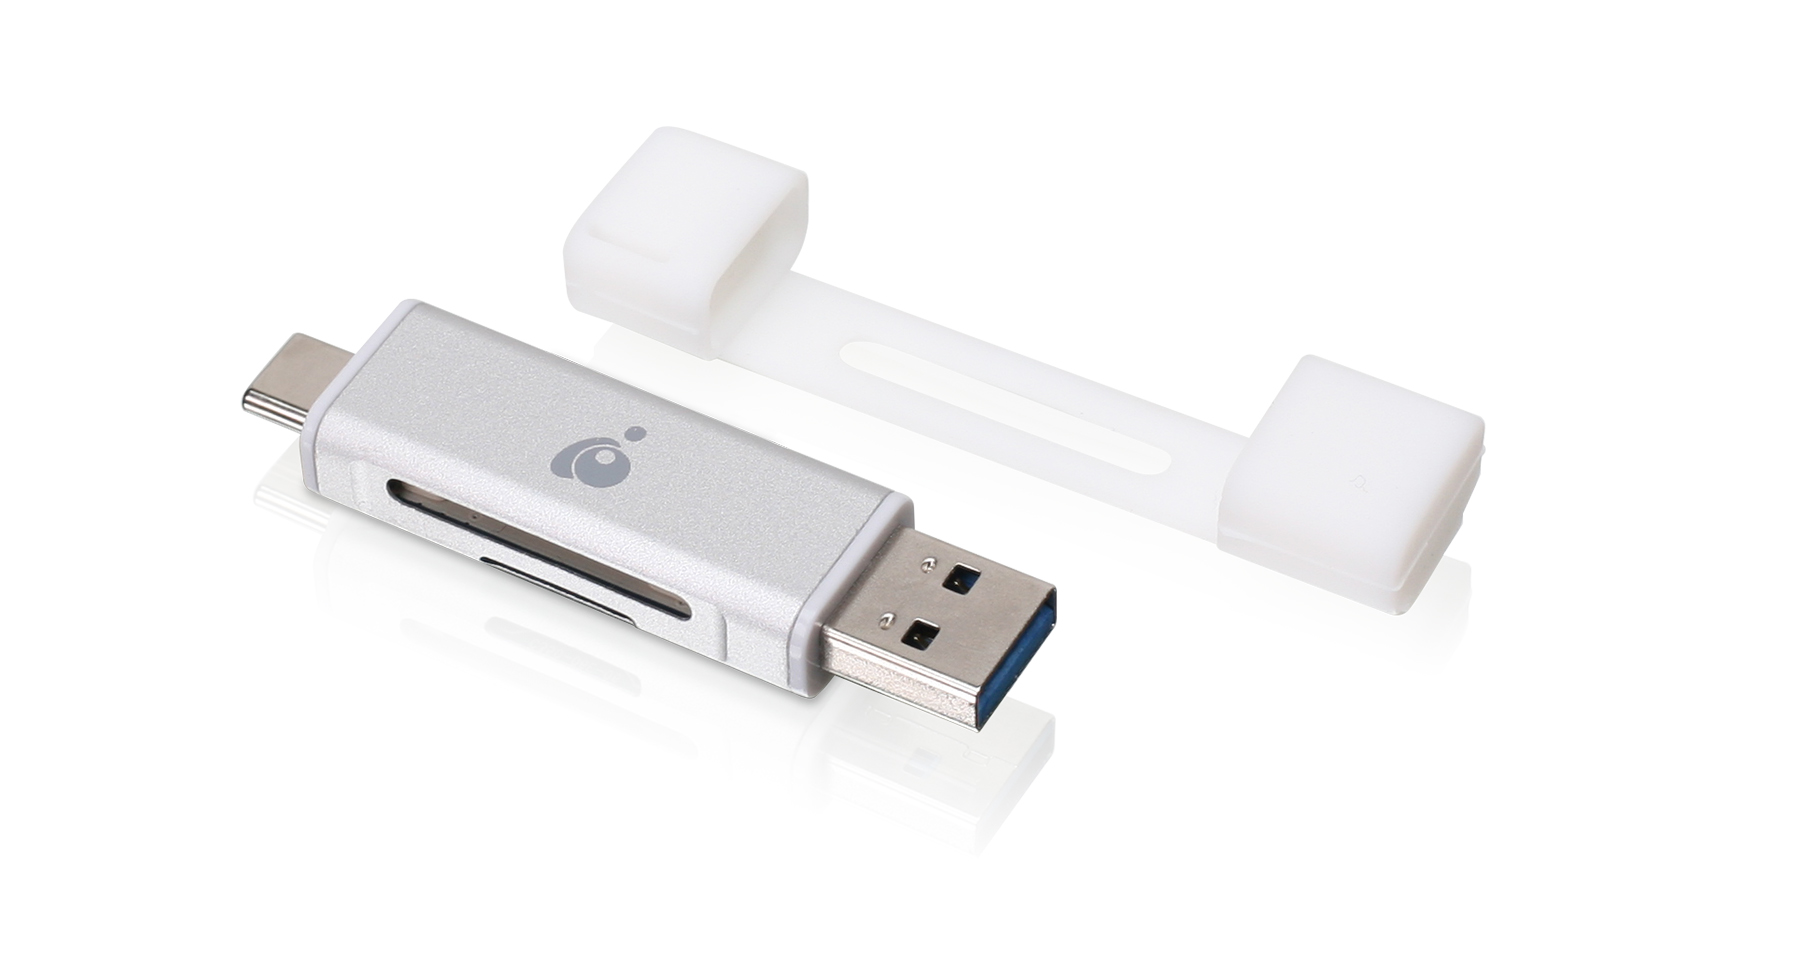 IOGEAR USB-C Duo Card Reader/Writer